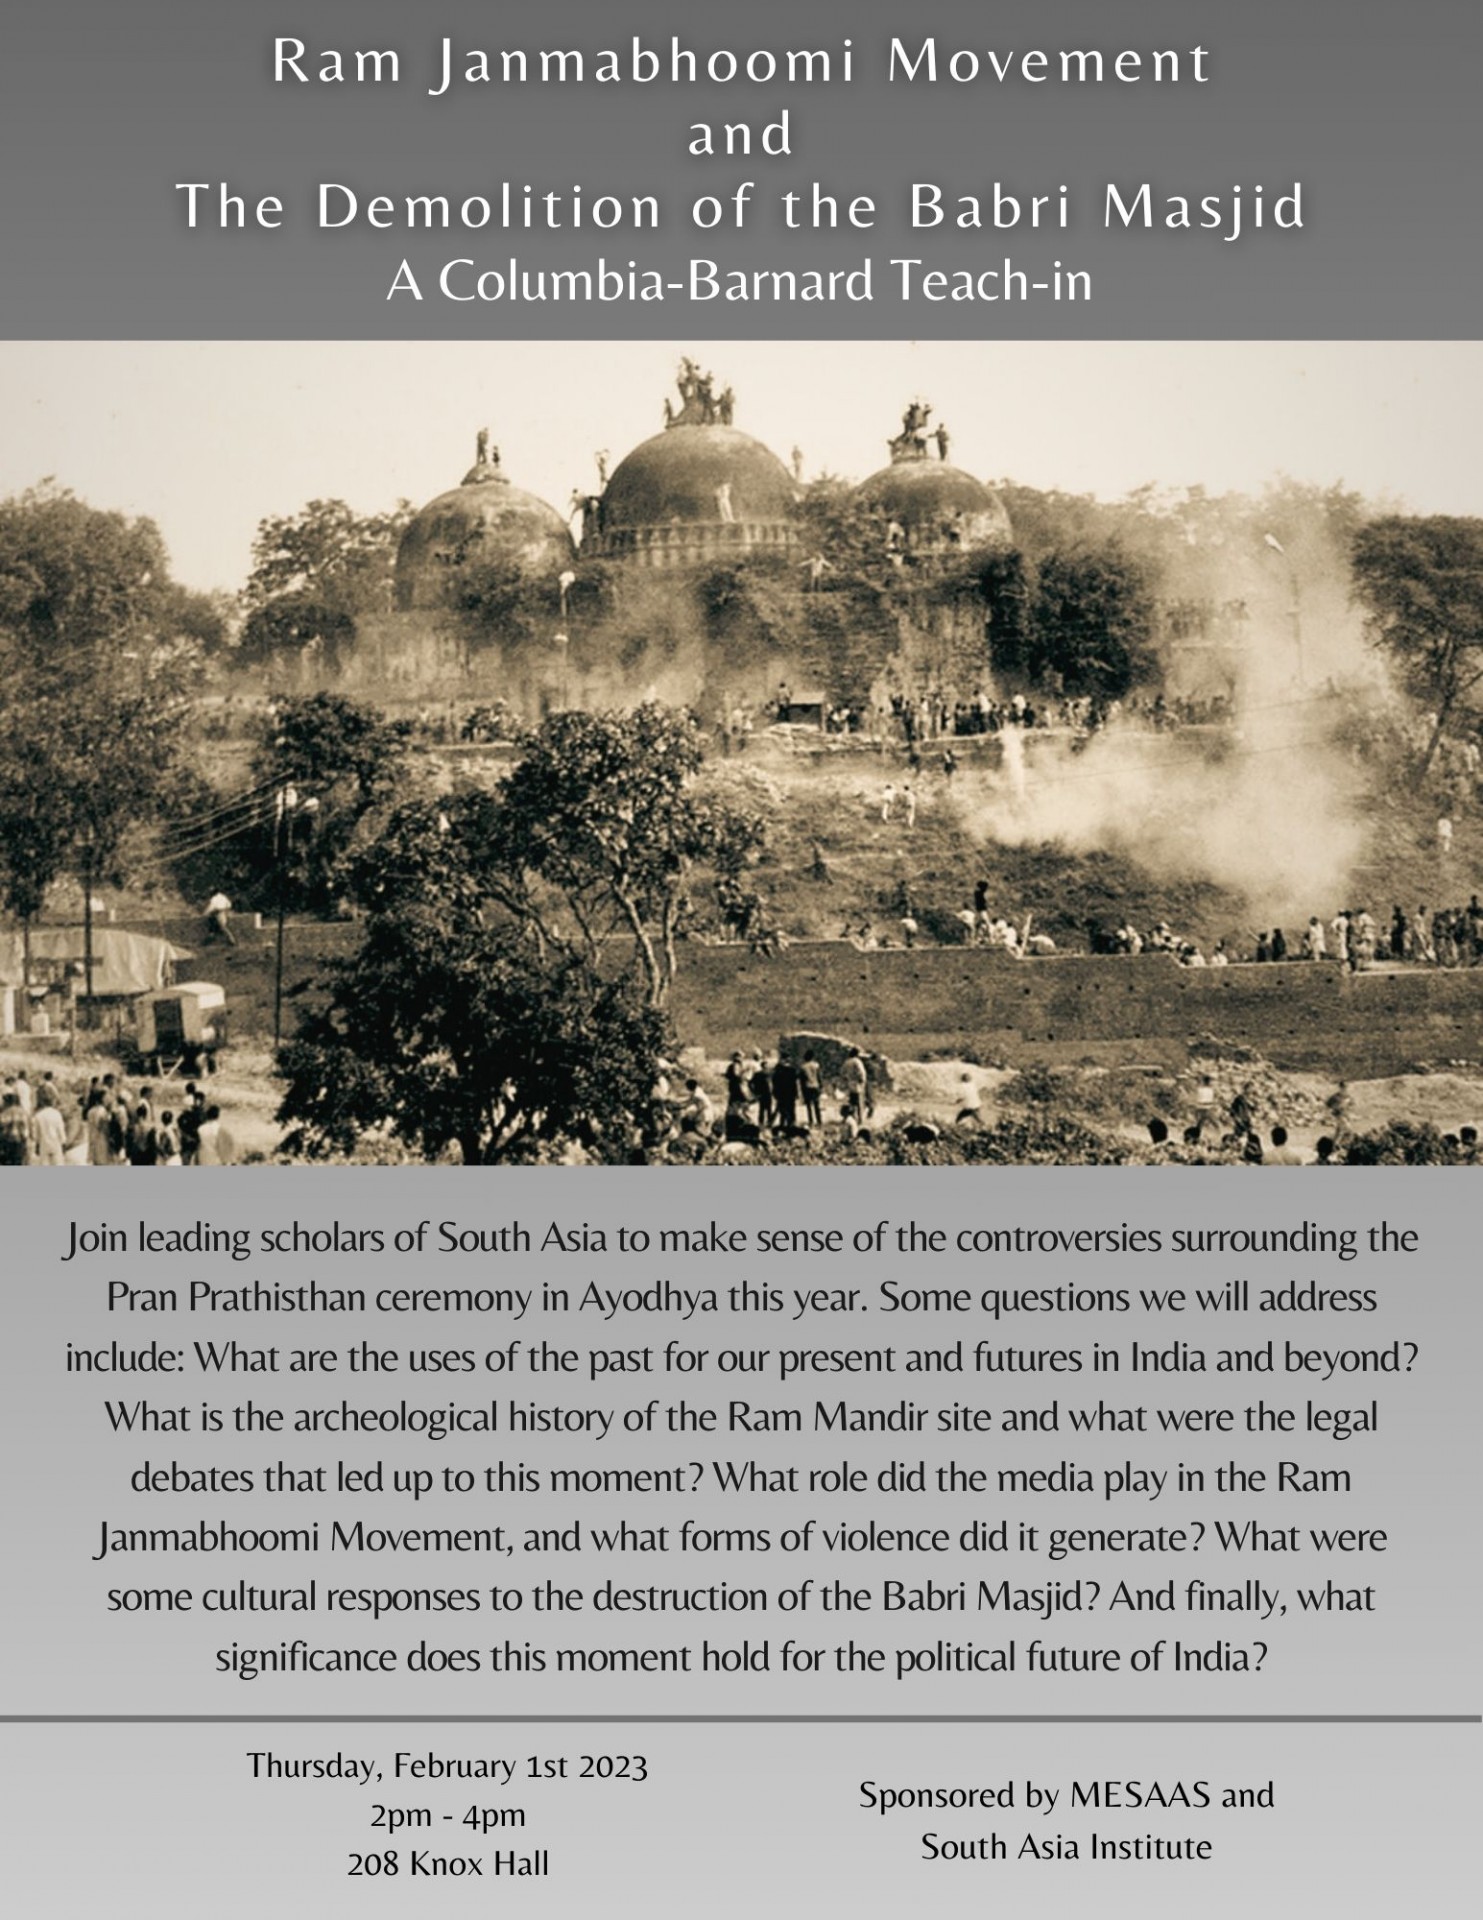 A Columbia-Barnard Teach-in:  Ram Janmabhoomi Movement and the Demolition of the Babri Masjid